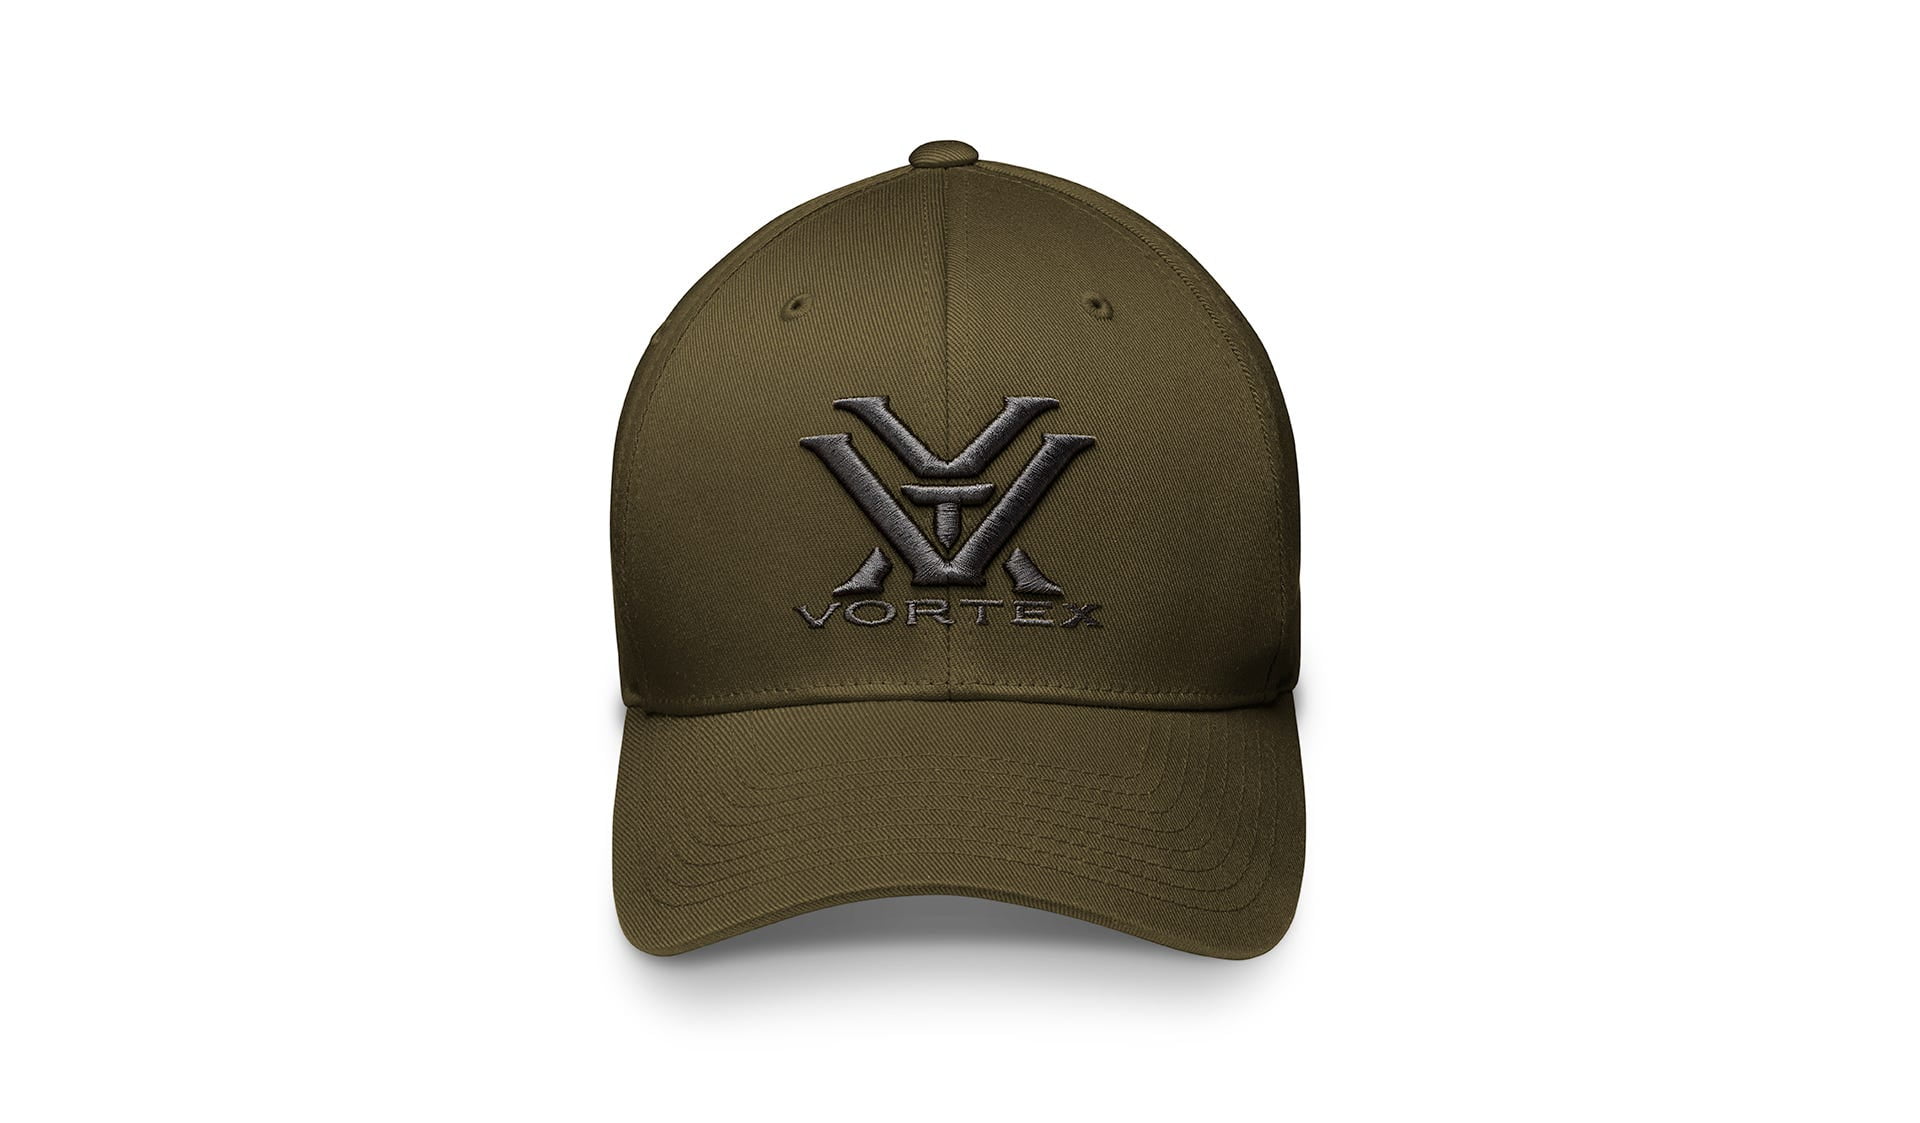 Size: L-XL Optics Adult Hats, Sport Vortex Drab, Olive Flexfit